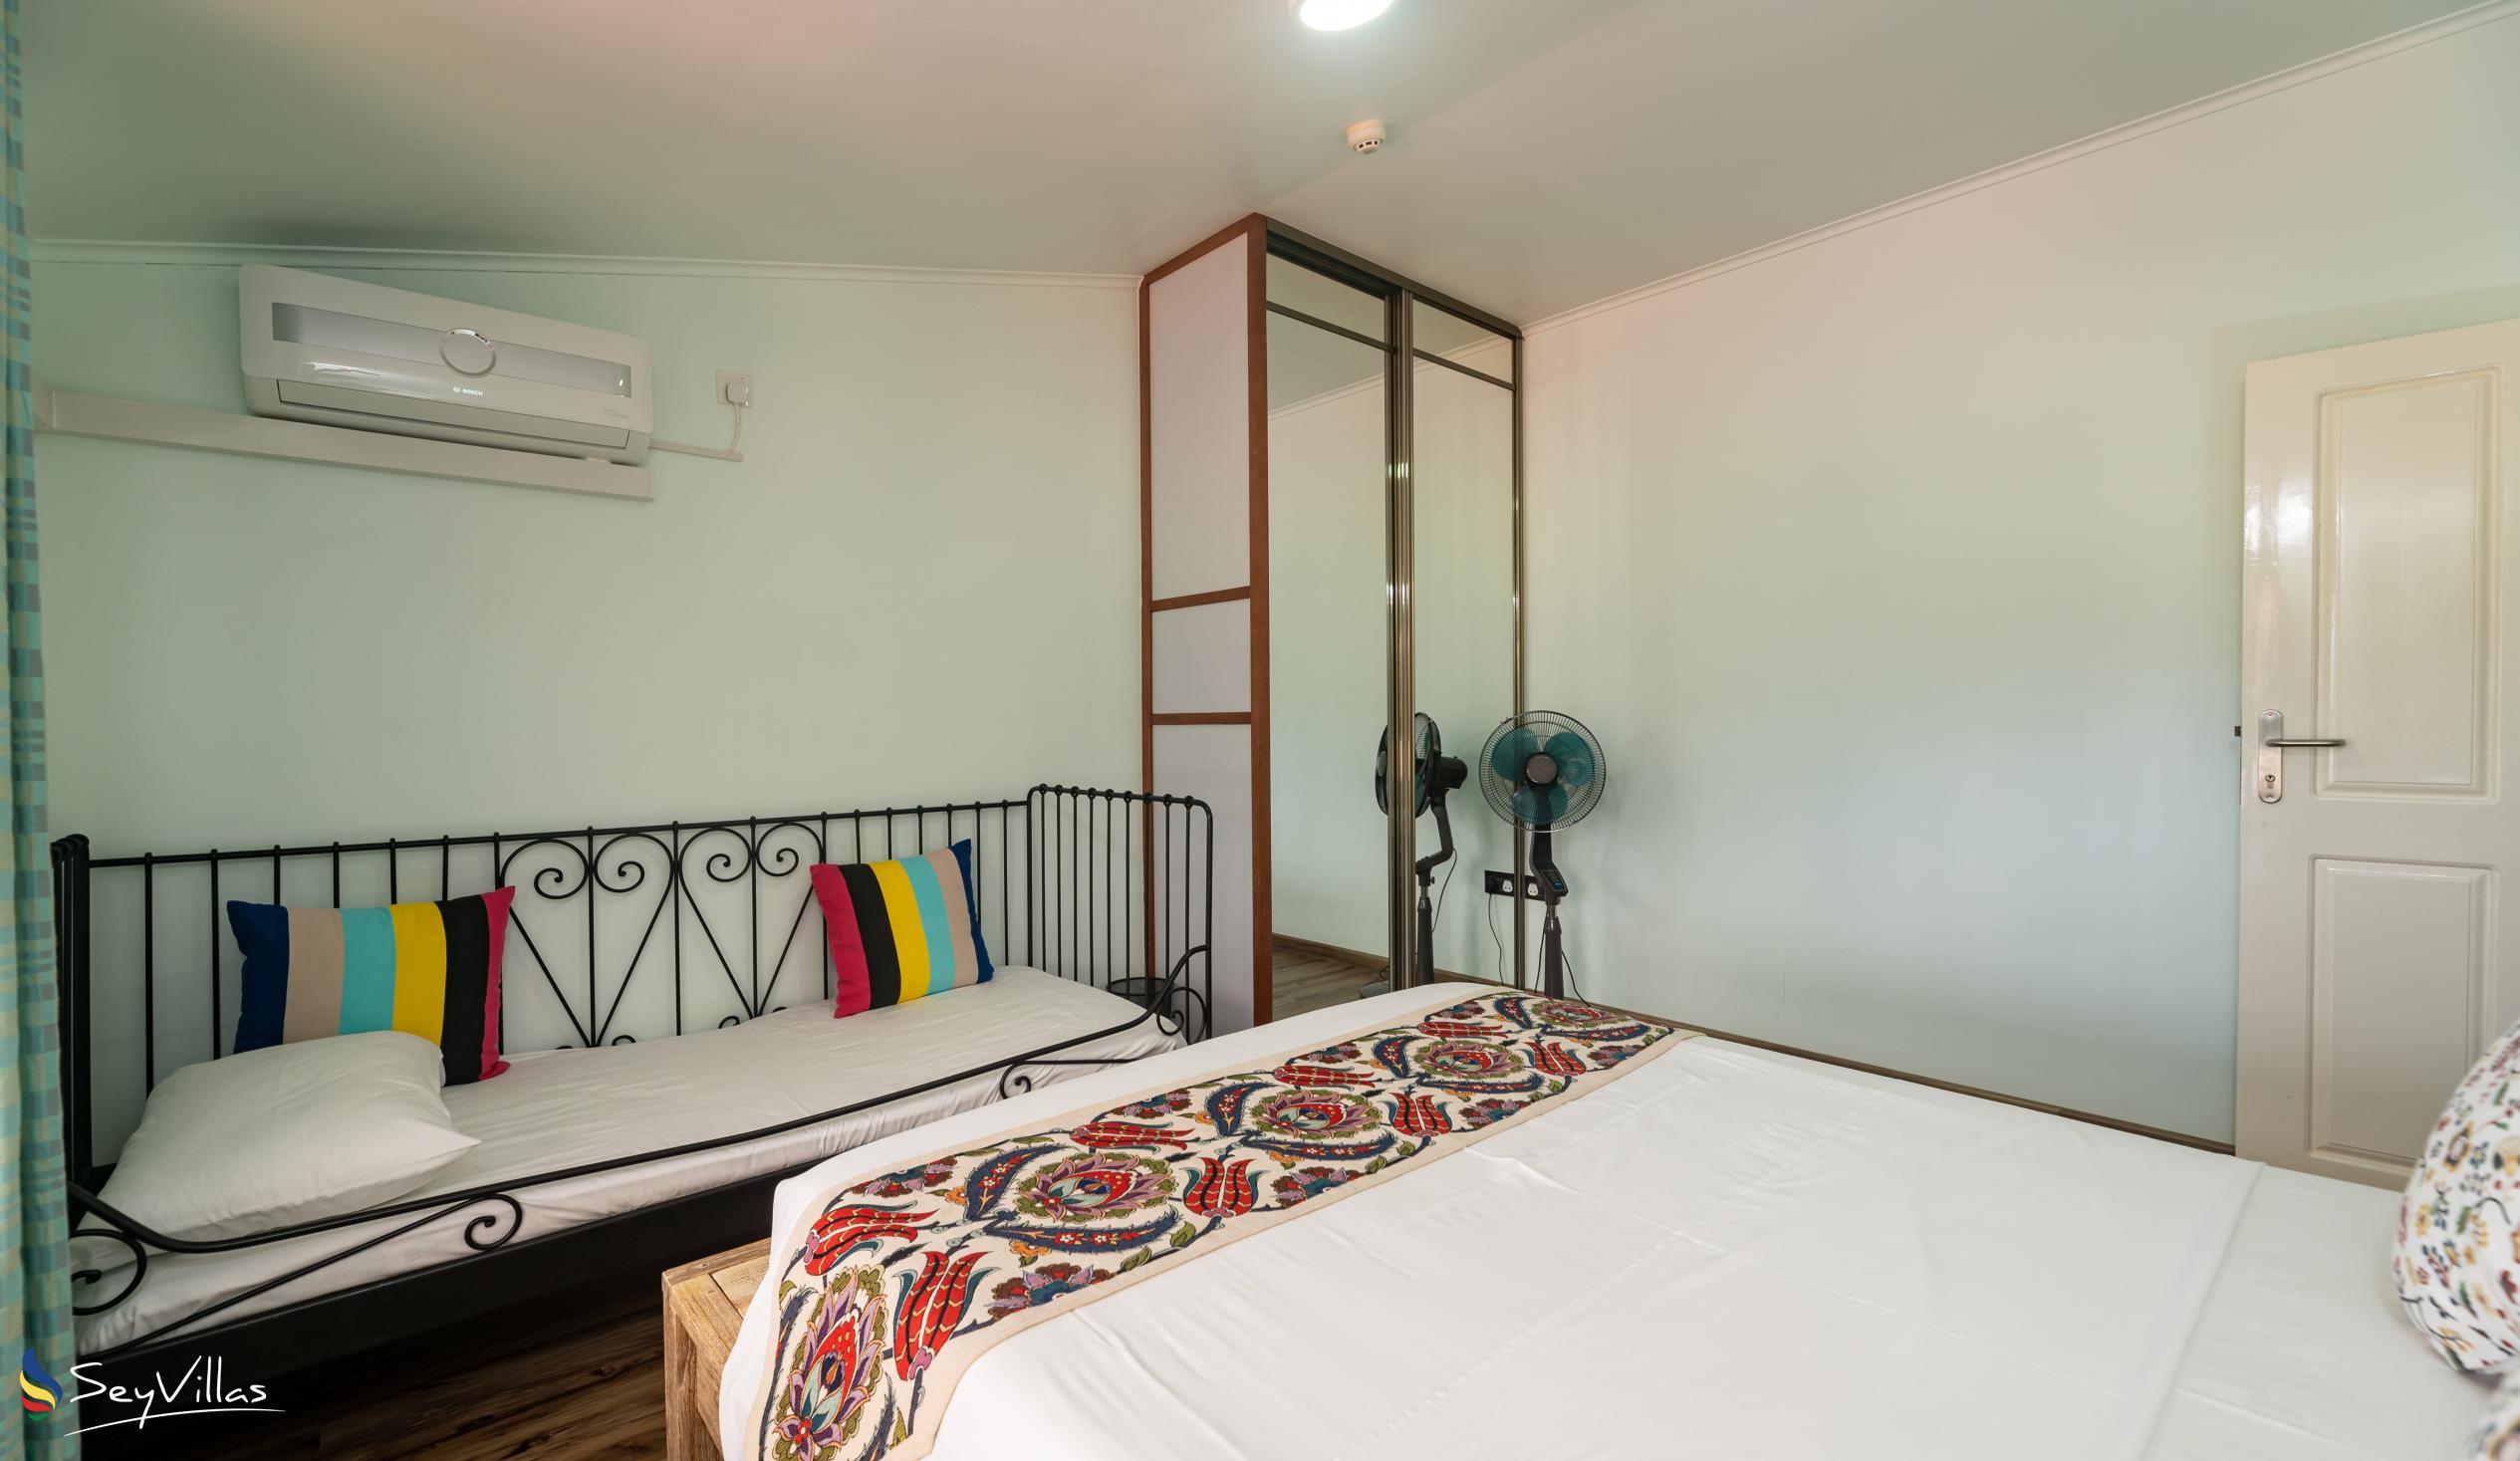 Photo 73: Cap-Sud Self Catering - 3-Bedroom Apartment - Mahé (Seychelles)